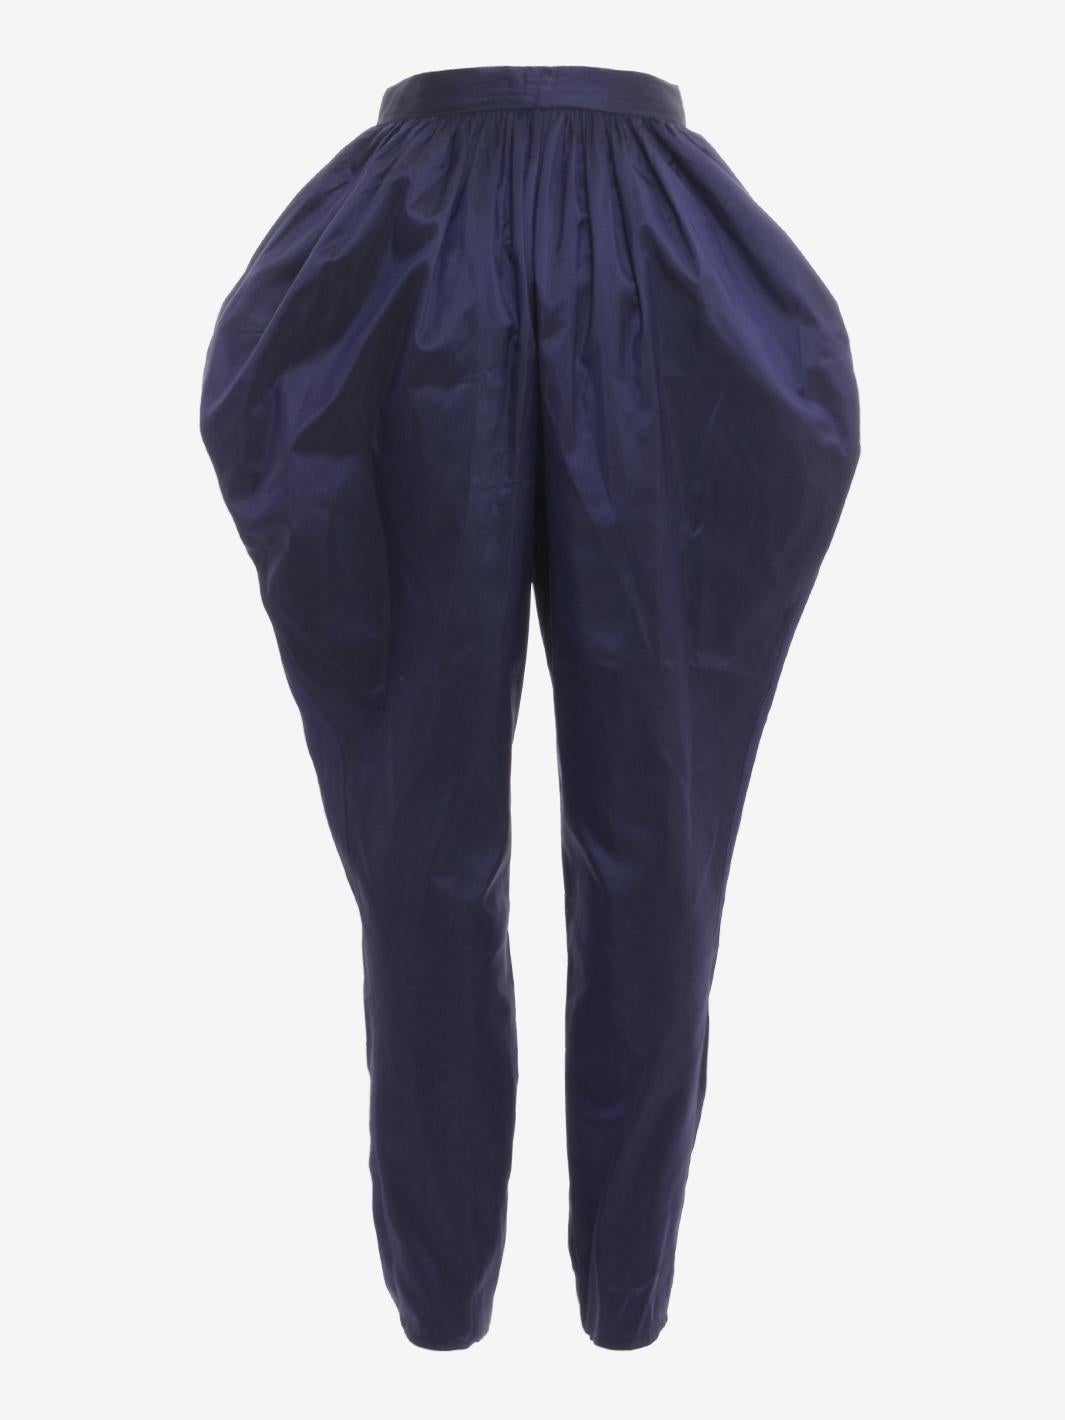 Krizia Silk Ballon Pants - 70s In Excellent Condition For Sale In Milano, IT